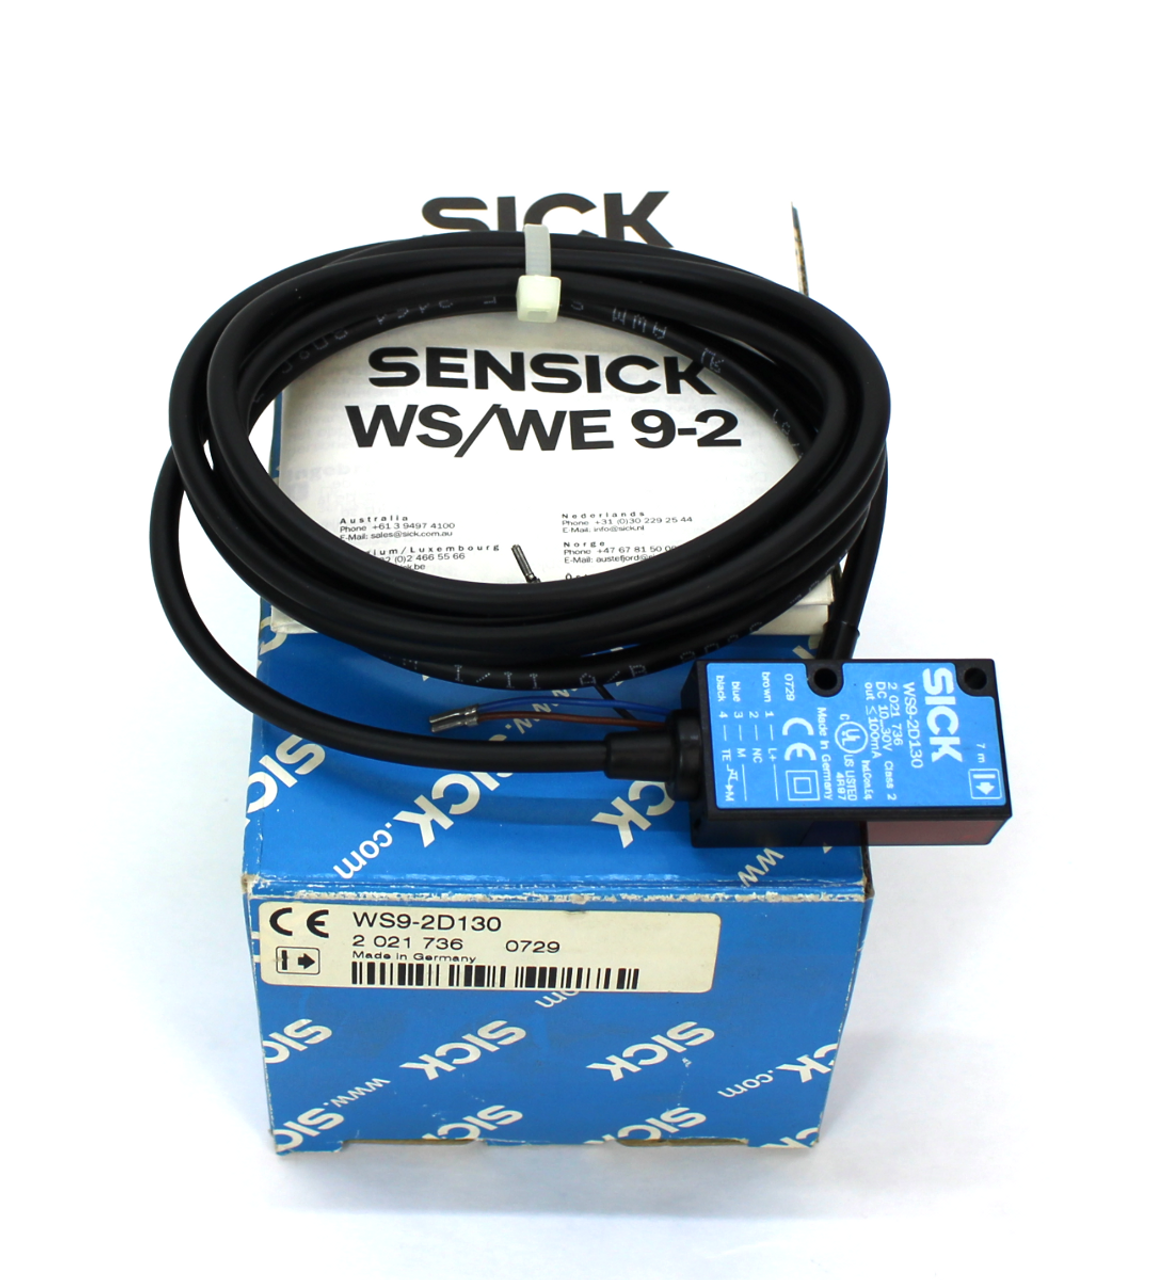 Sick WS9-2D130 Photoelectric Optic Switch Sensor